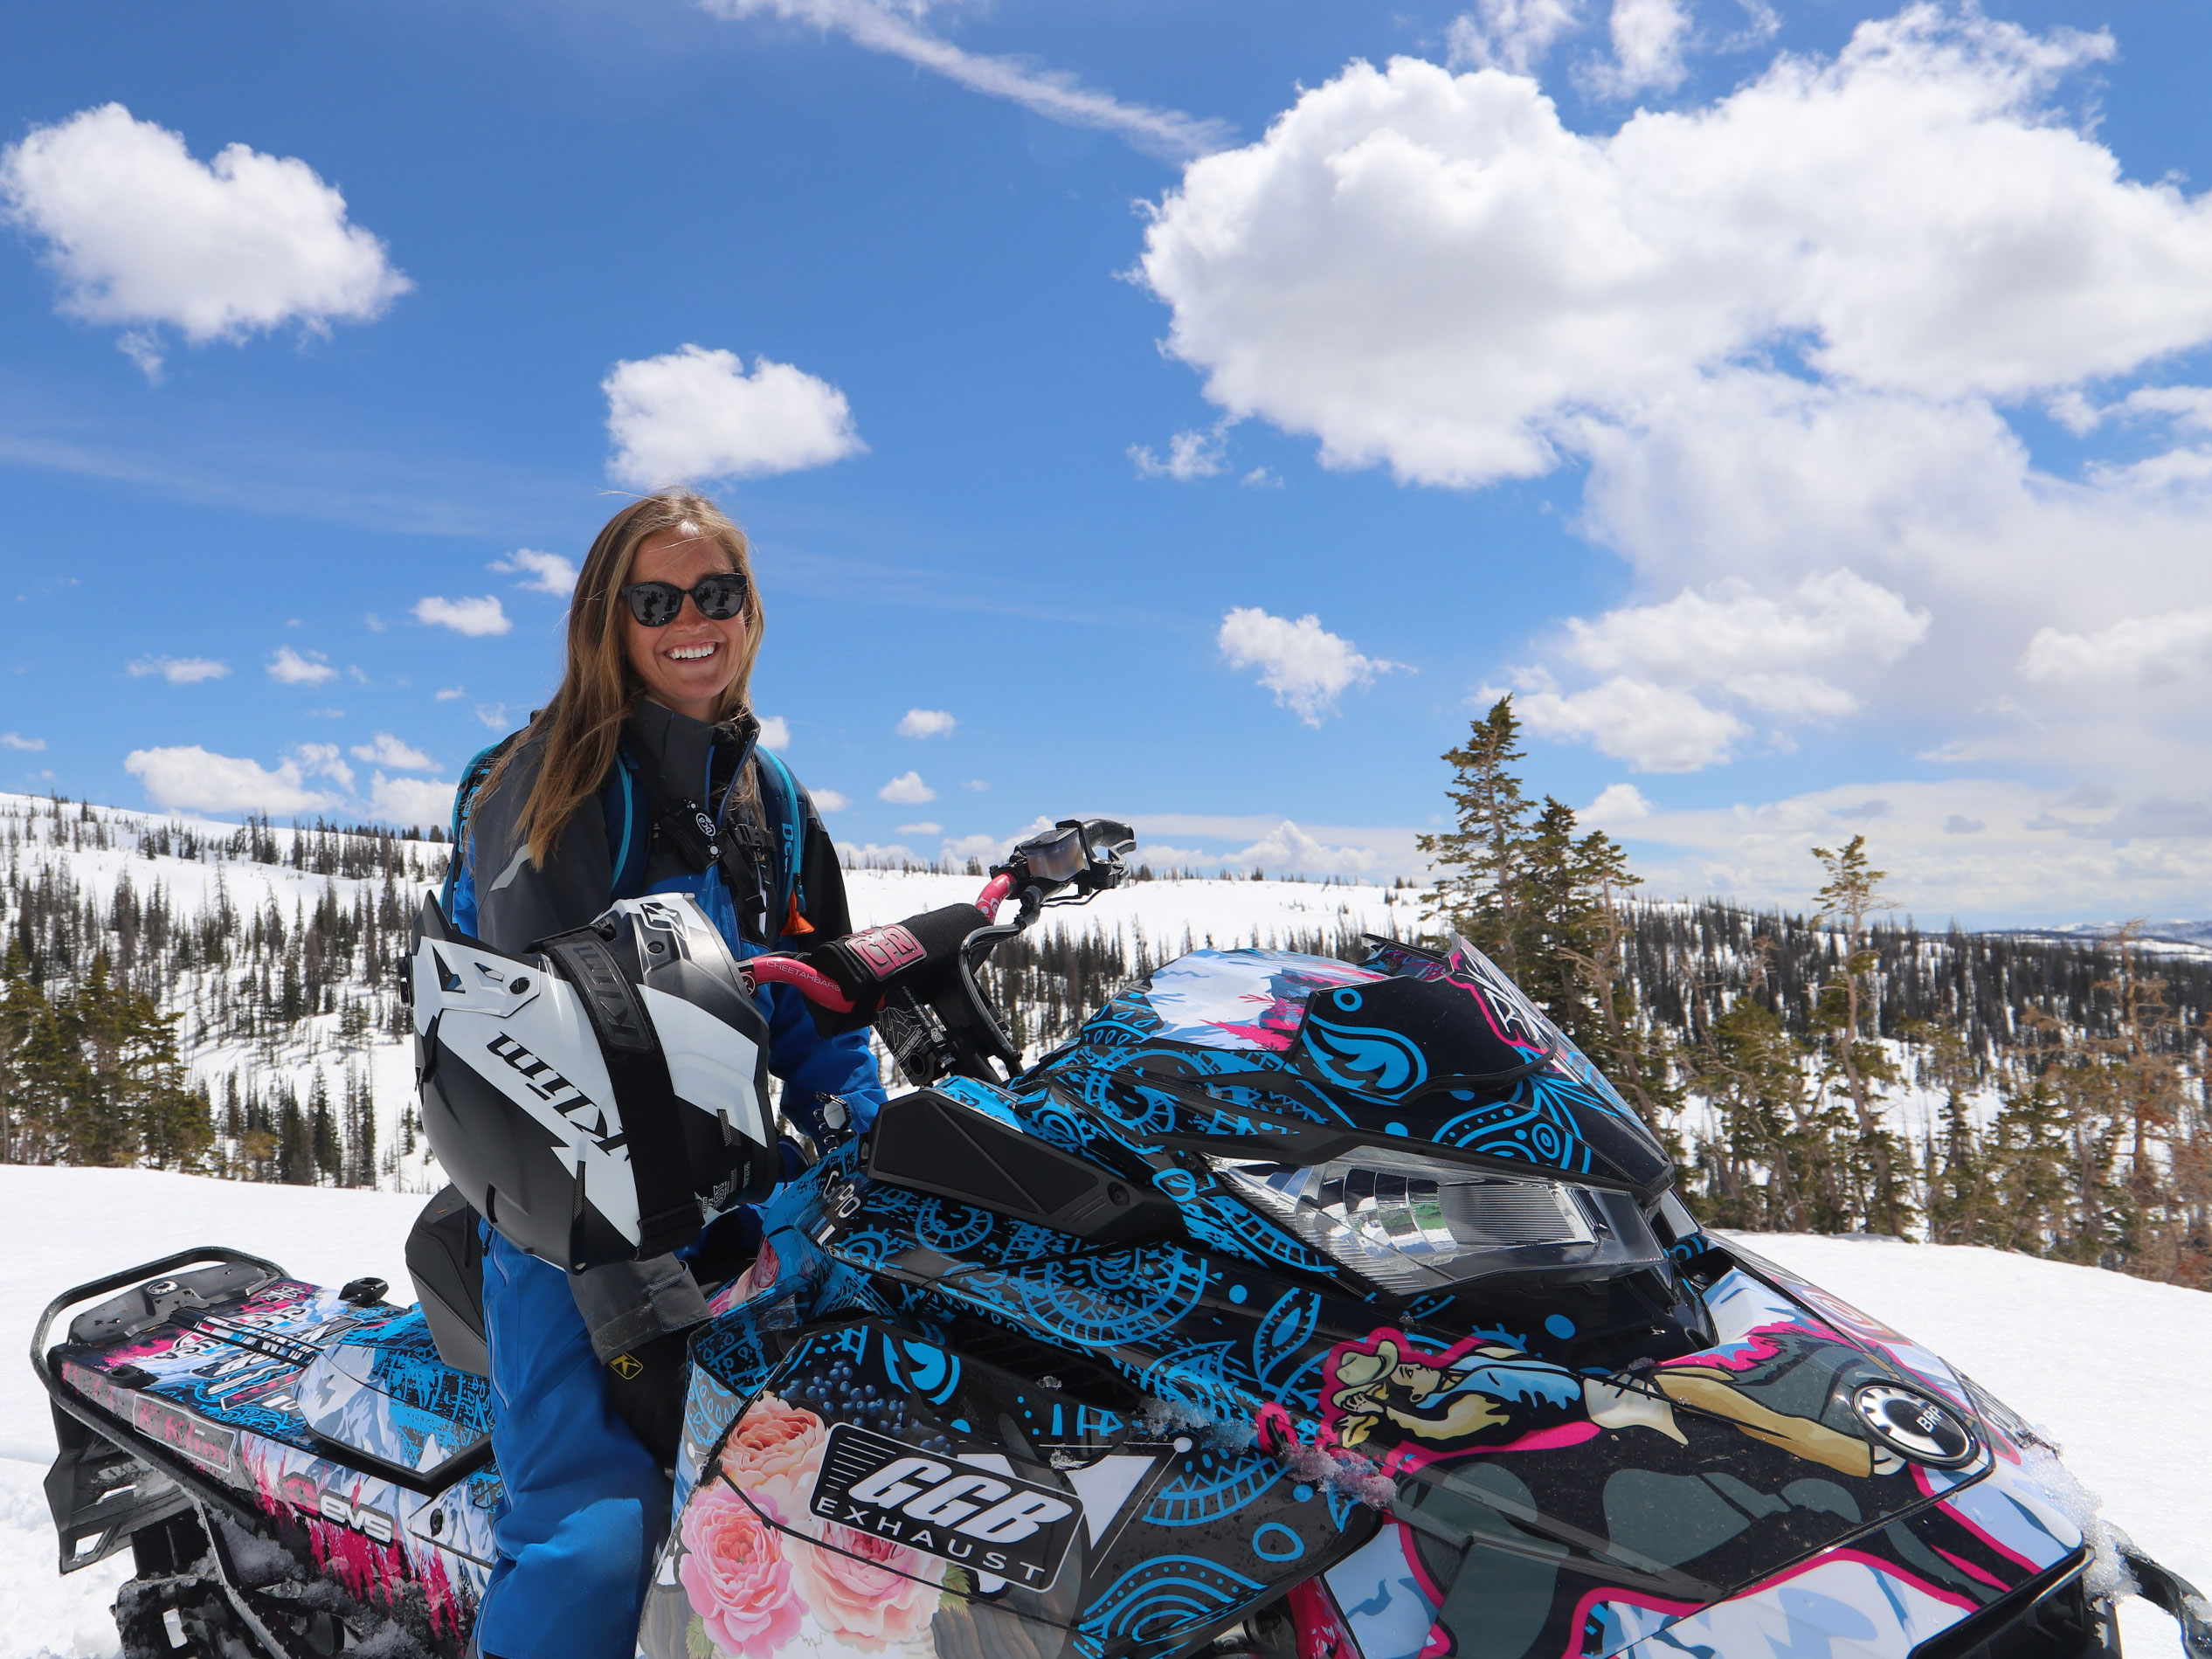 Ski-Doo Ambassador Stefanie Dean sitting on her custom Ski-Doo snowmobile